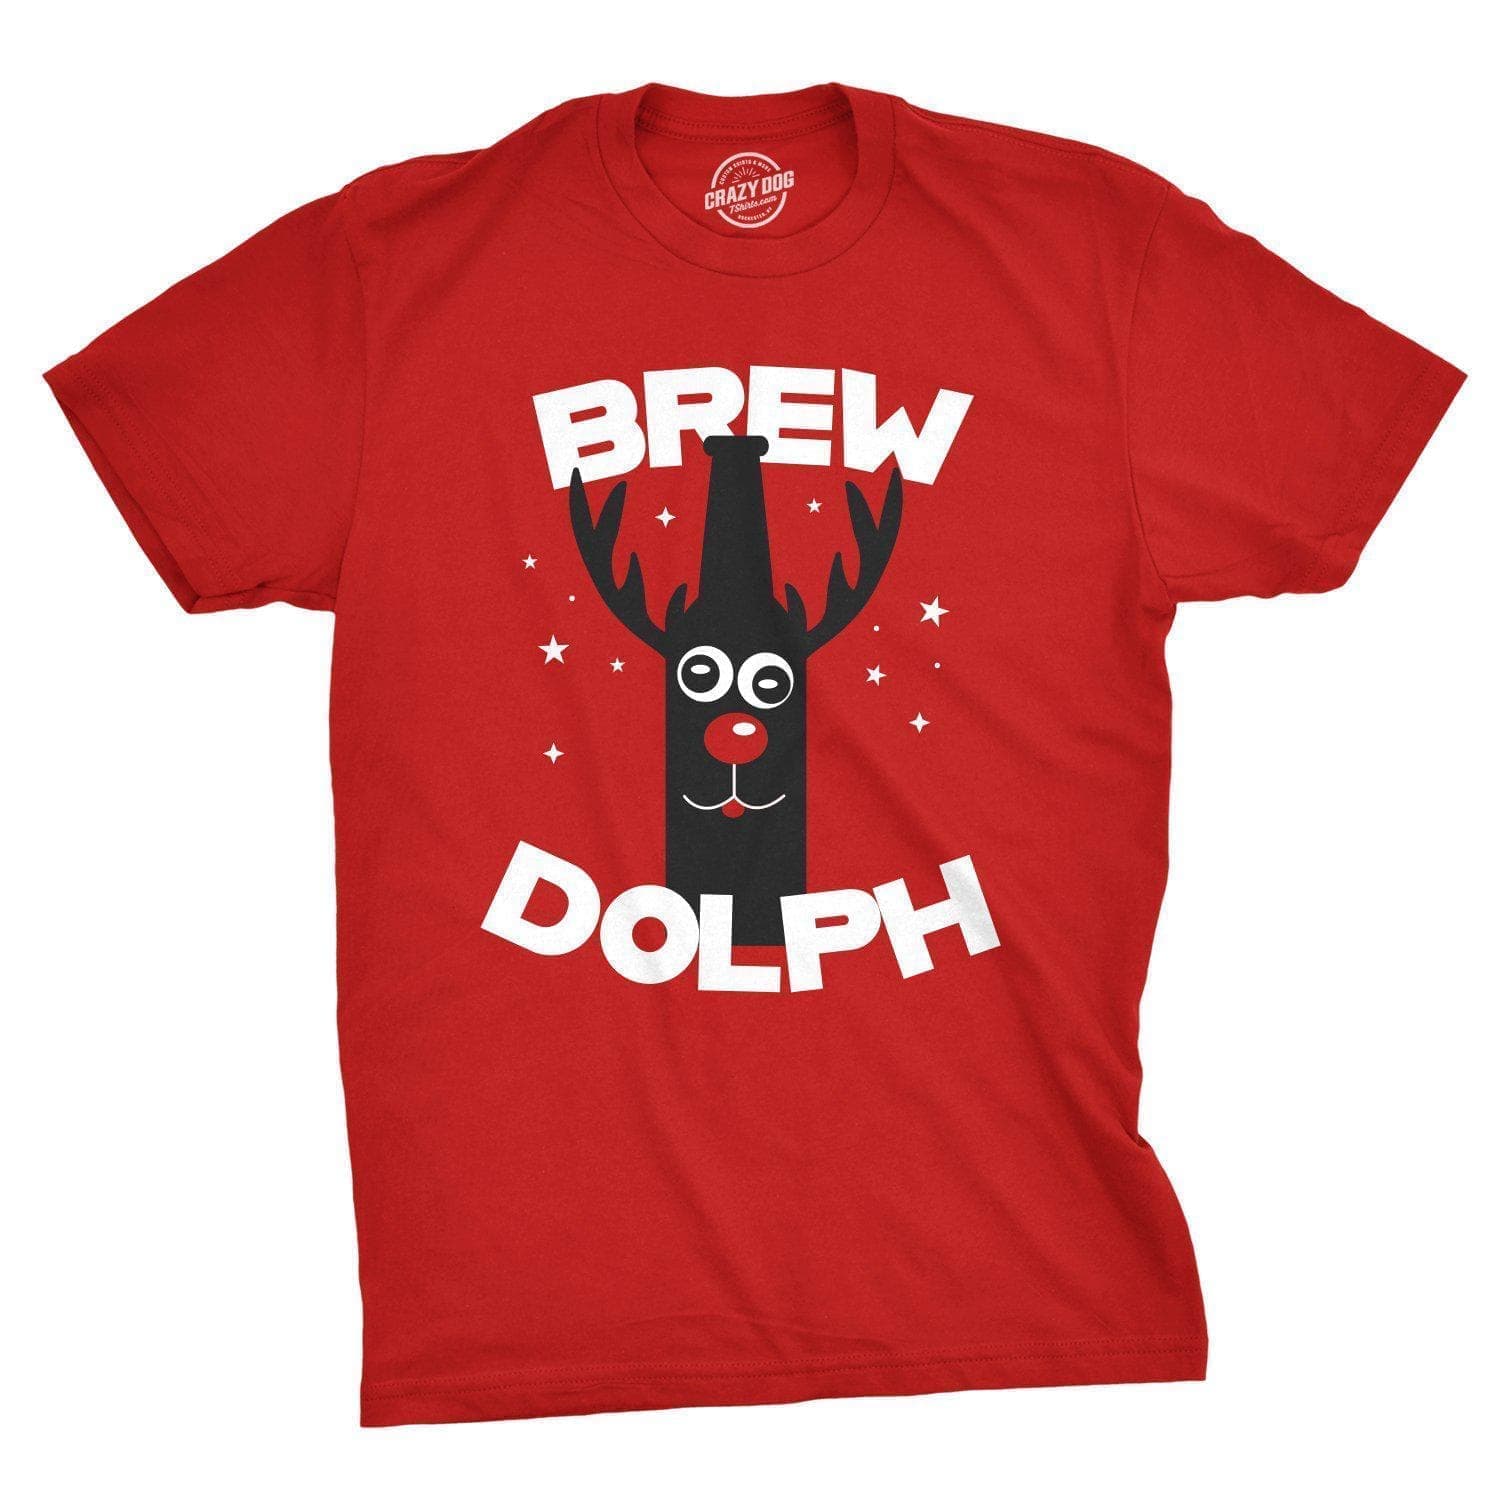 Brew Dolph Men's Tshirt - Crazy Dog T-Shirts